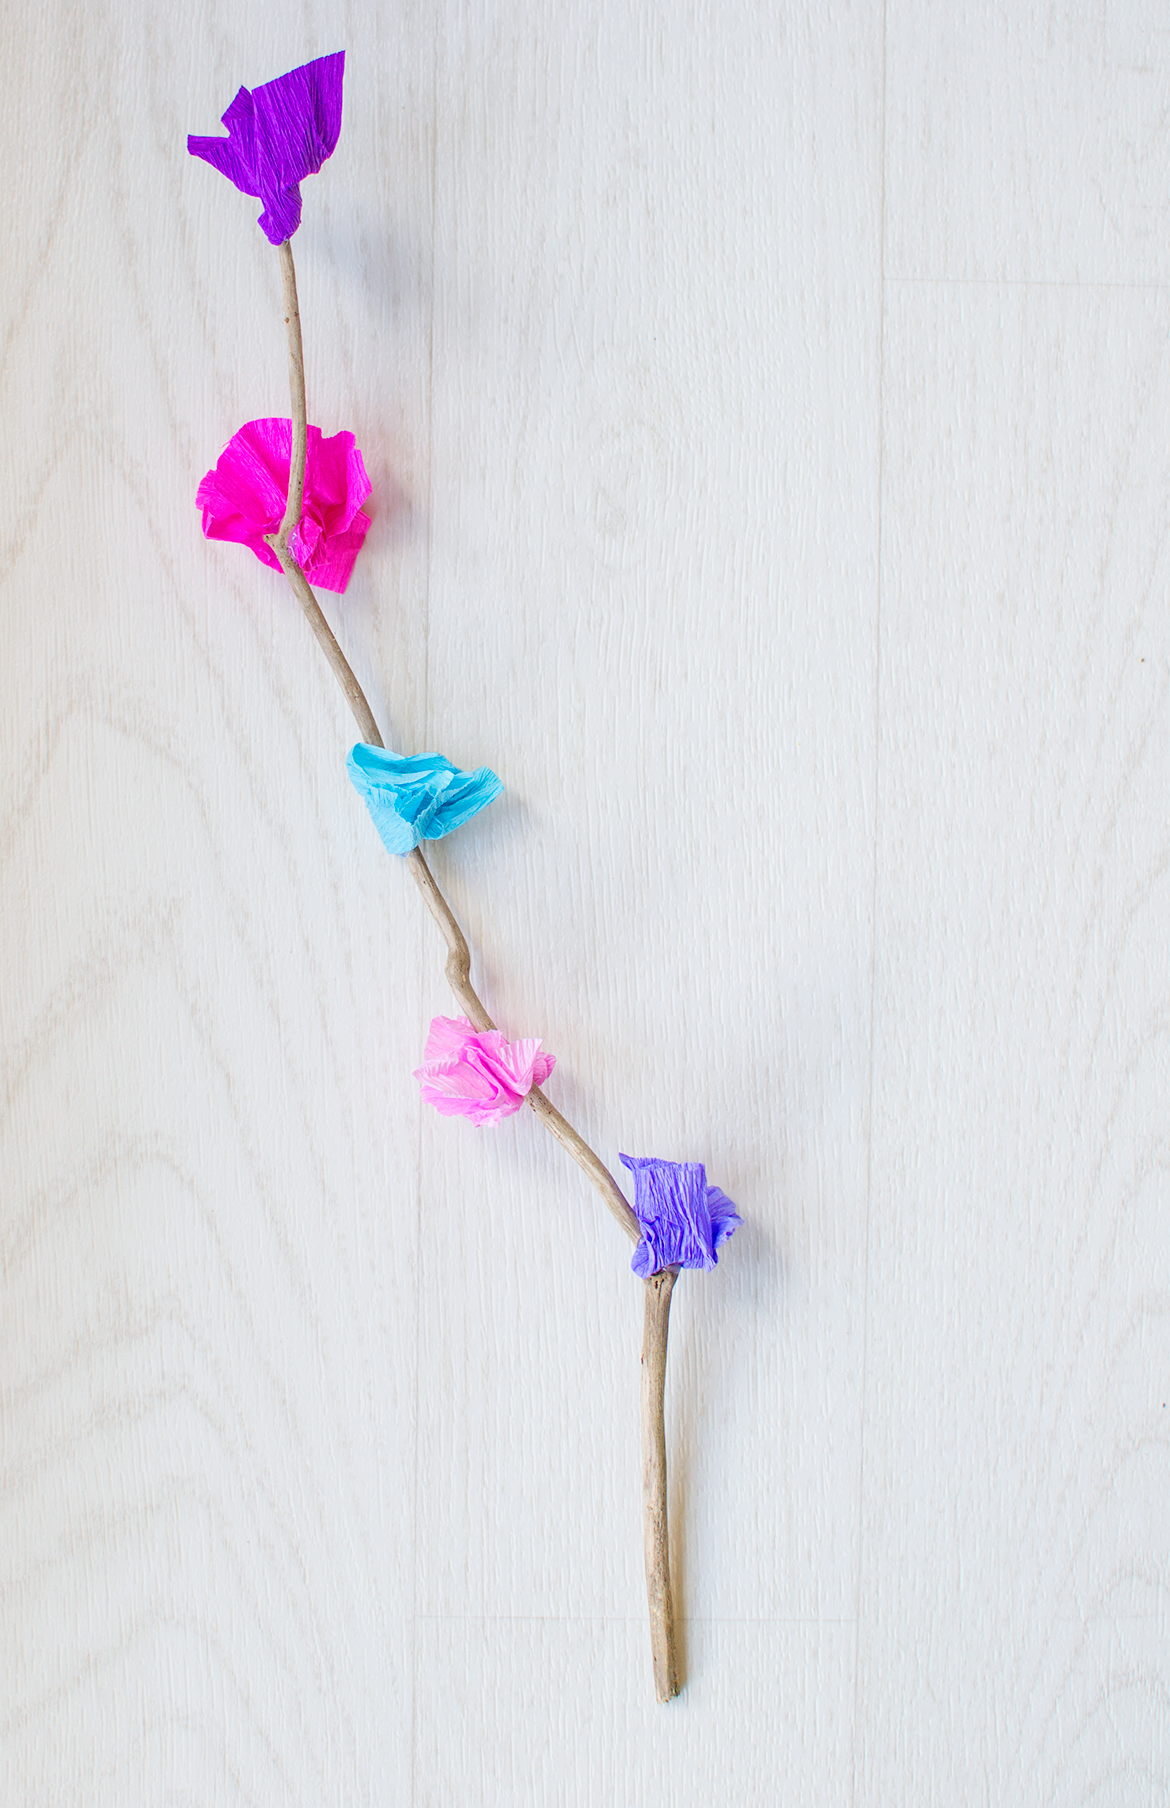 Handmade Flowers Using Sticks: Simple Tutorial